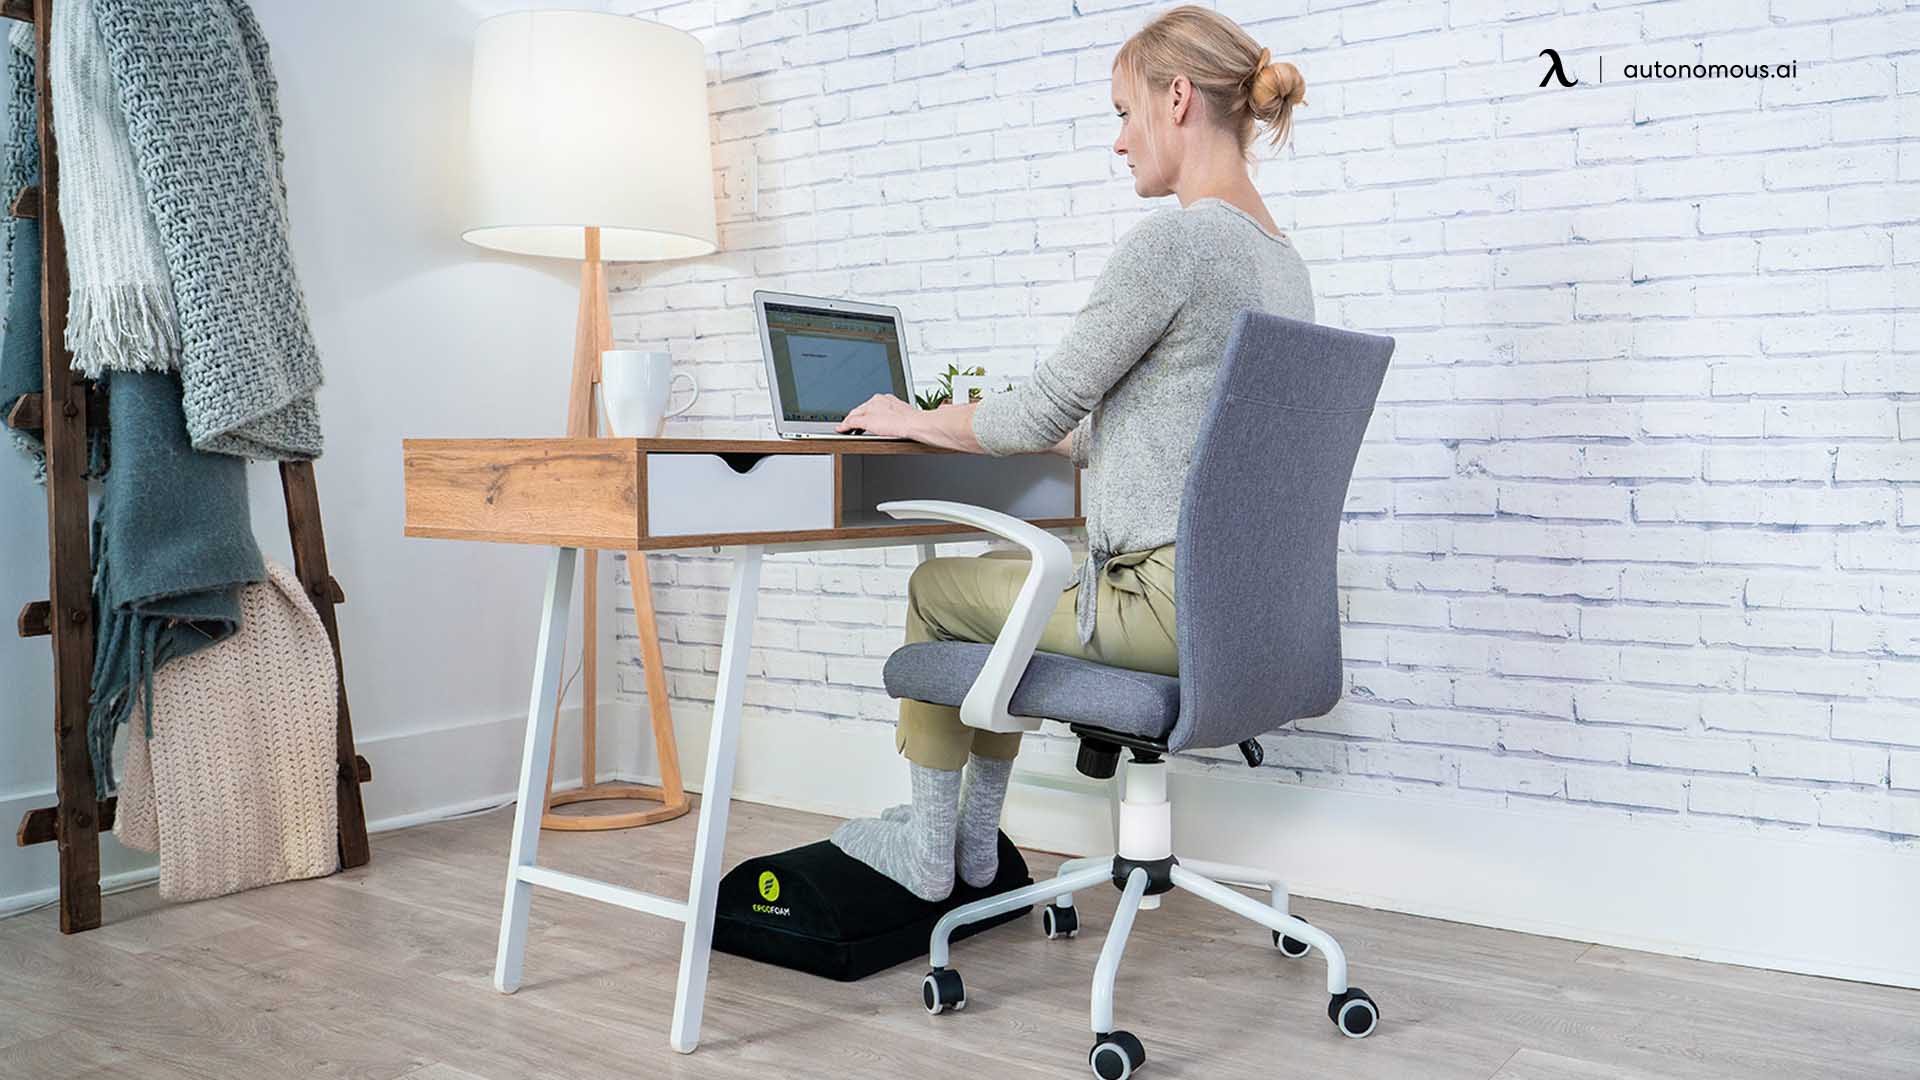 adjustable footrest under desks help you Stretch and Relax